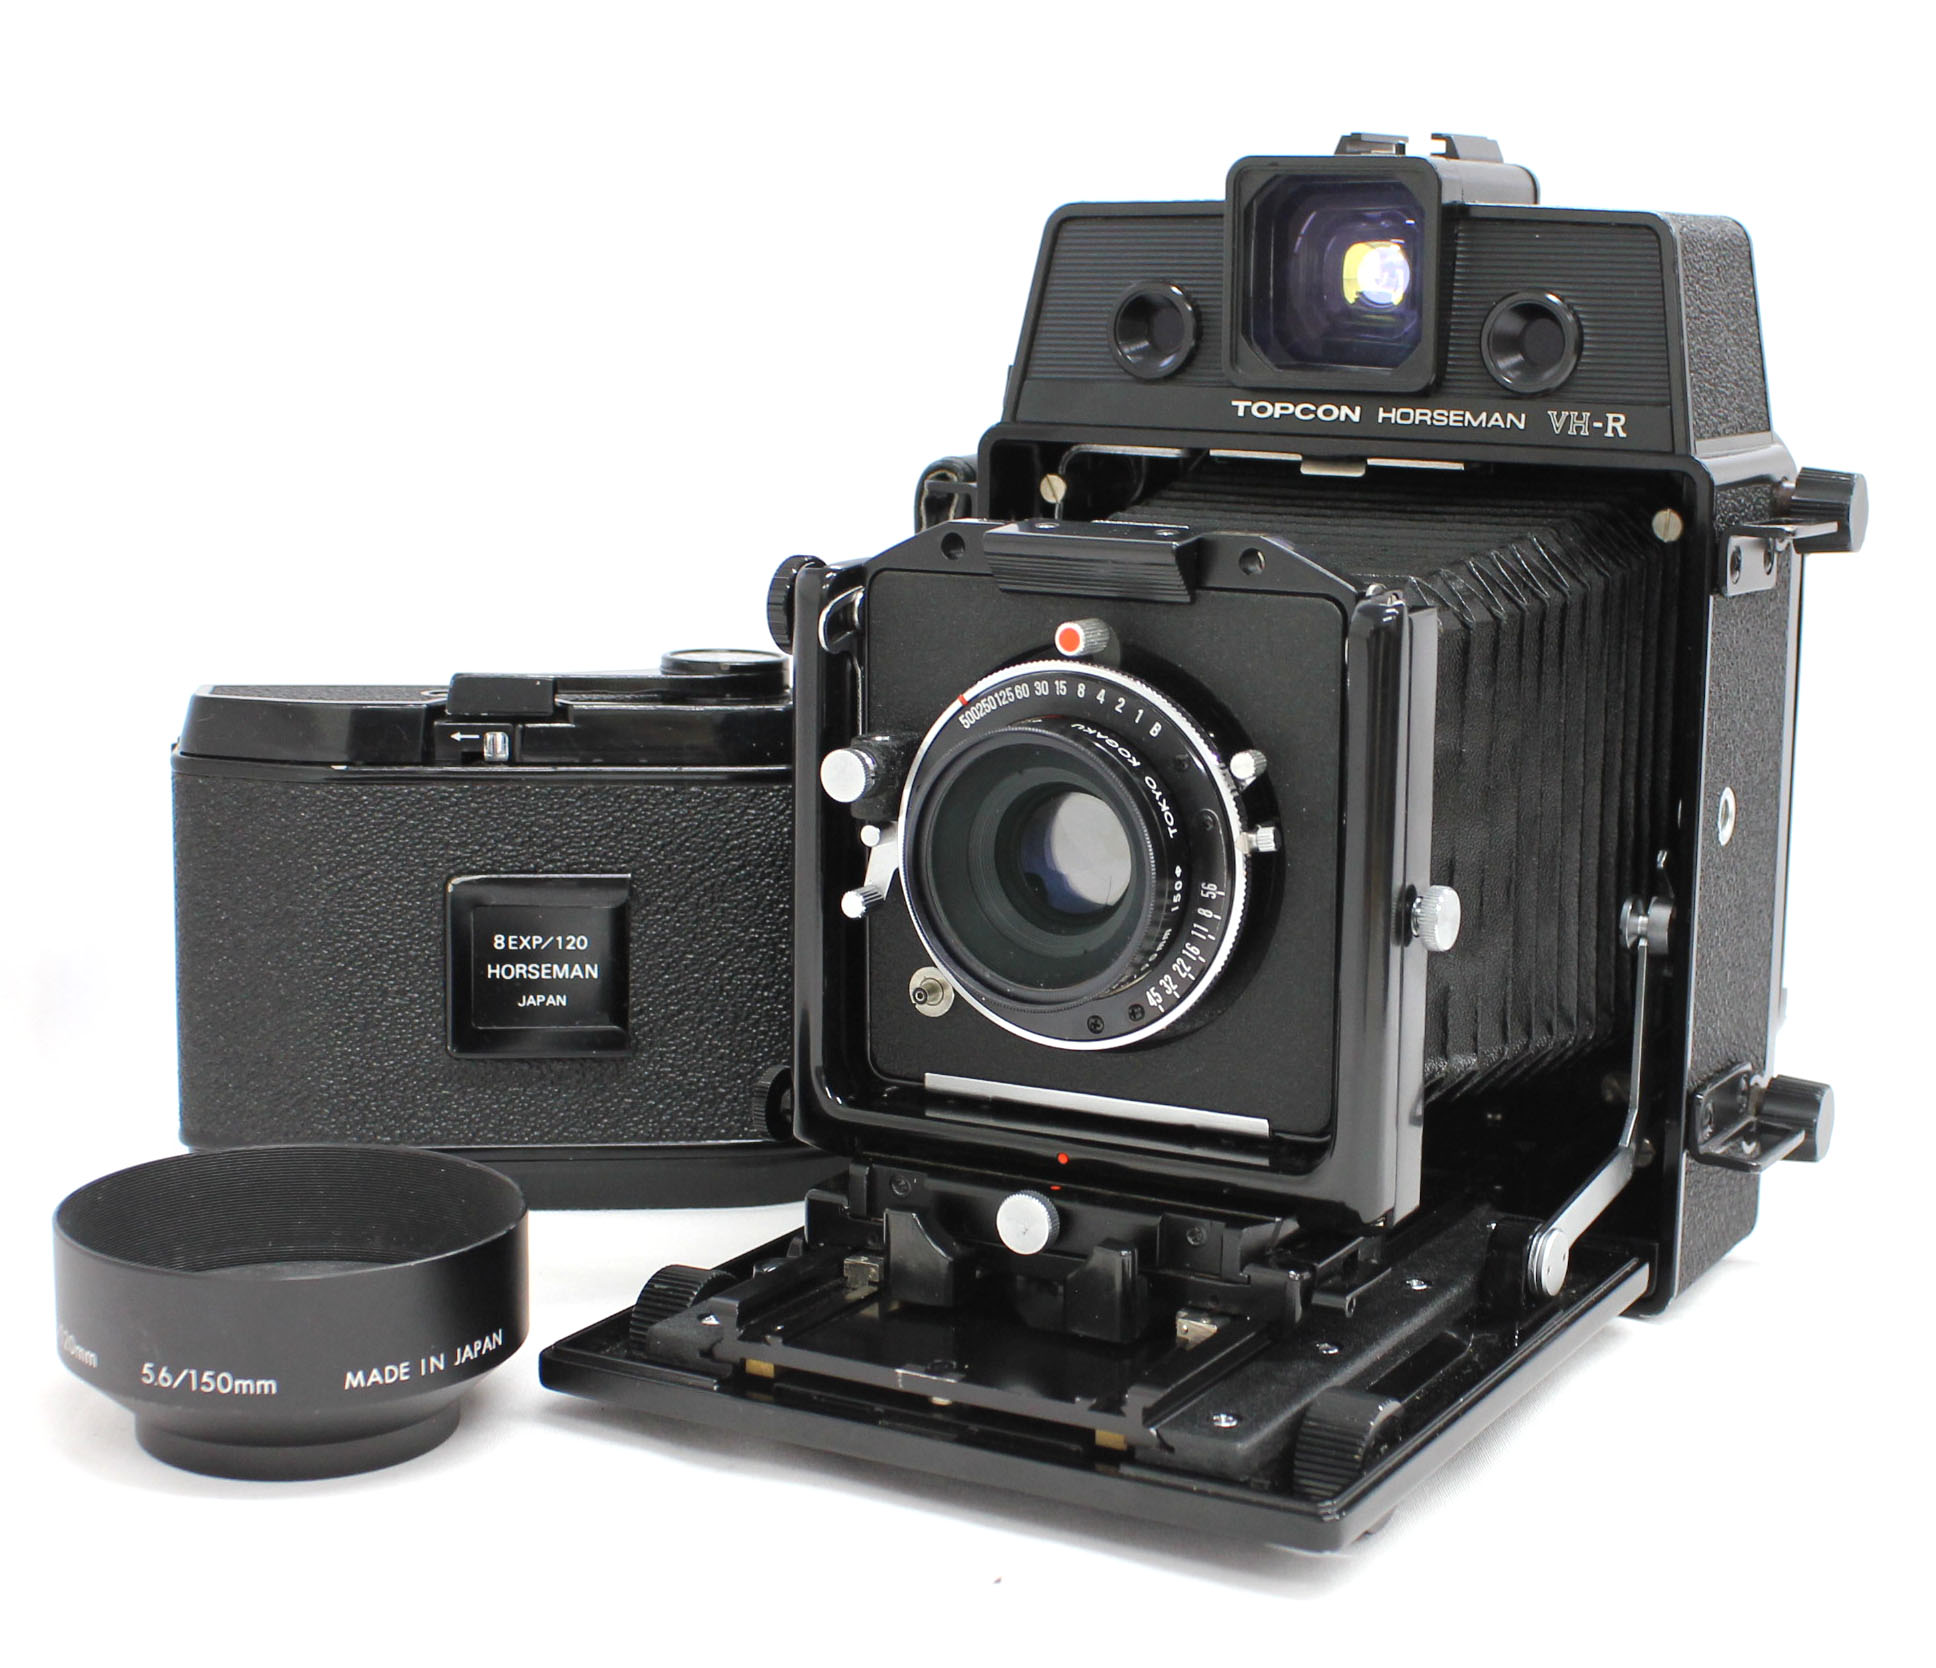 Japan Used Camera Shop | Topcon Horseman VH-R + Super Topcor 90mm F/5.6 w/ Hood + 8EXP/120 Holder from Japan